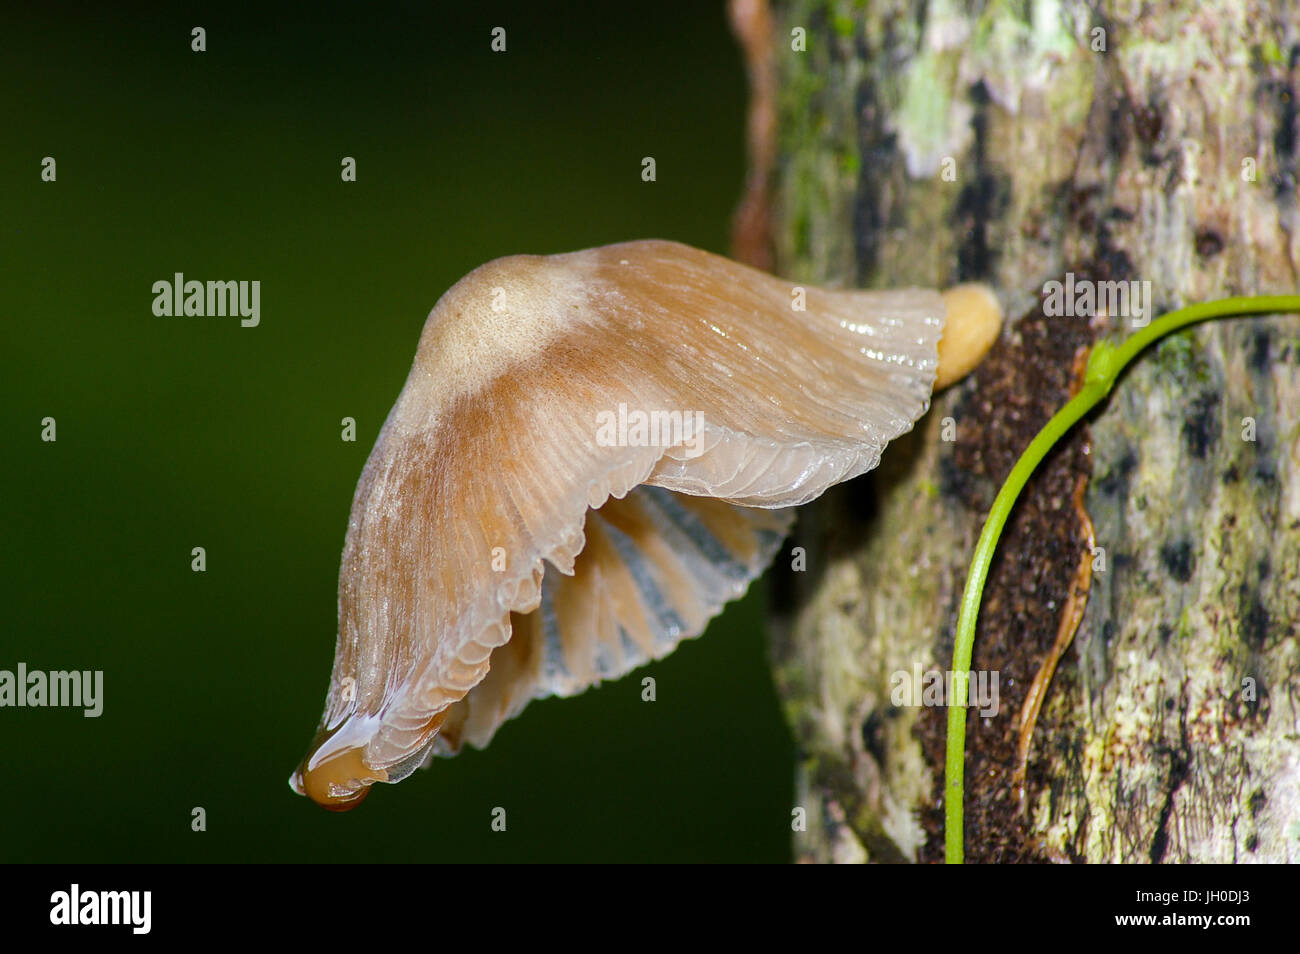 Fungi growing on a tree Stock Photo